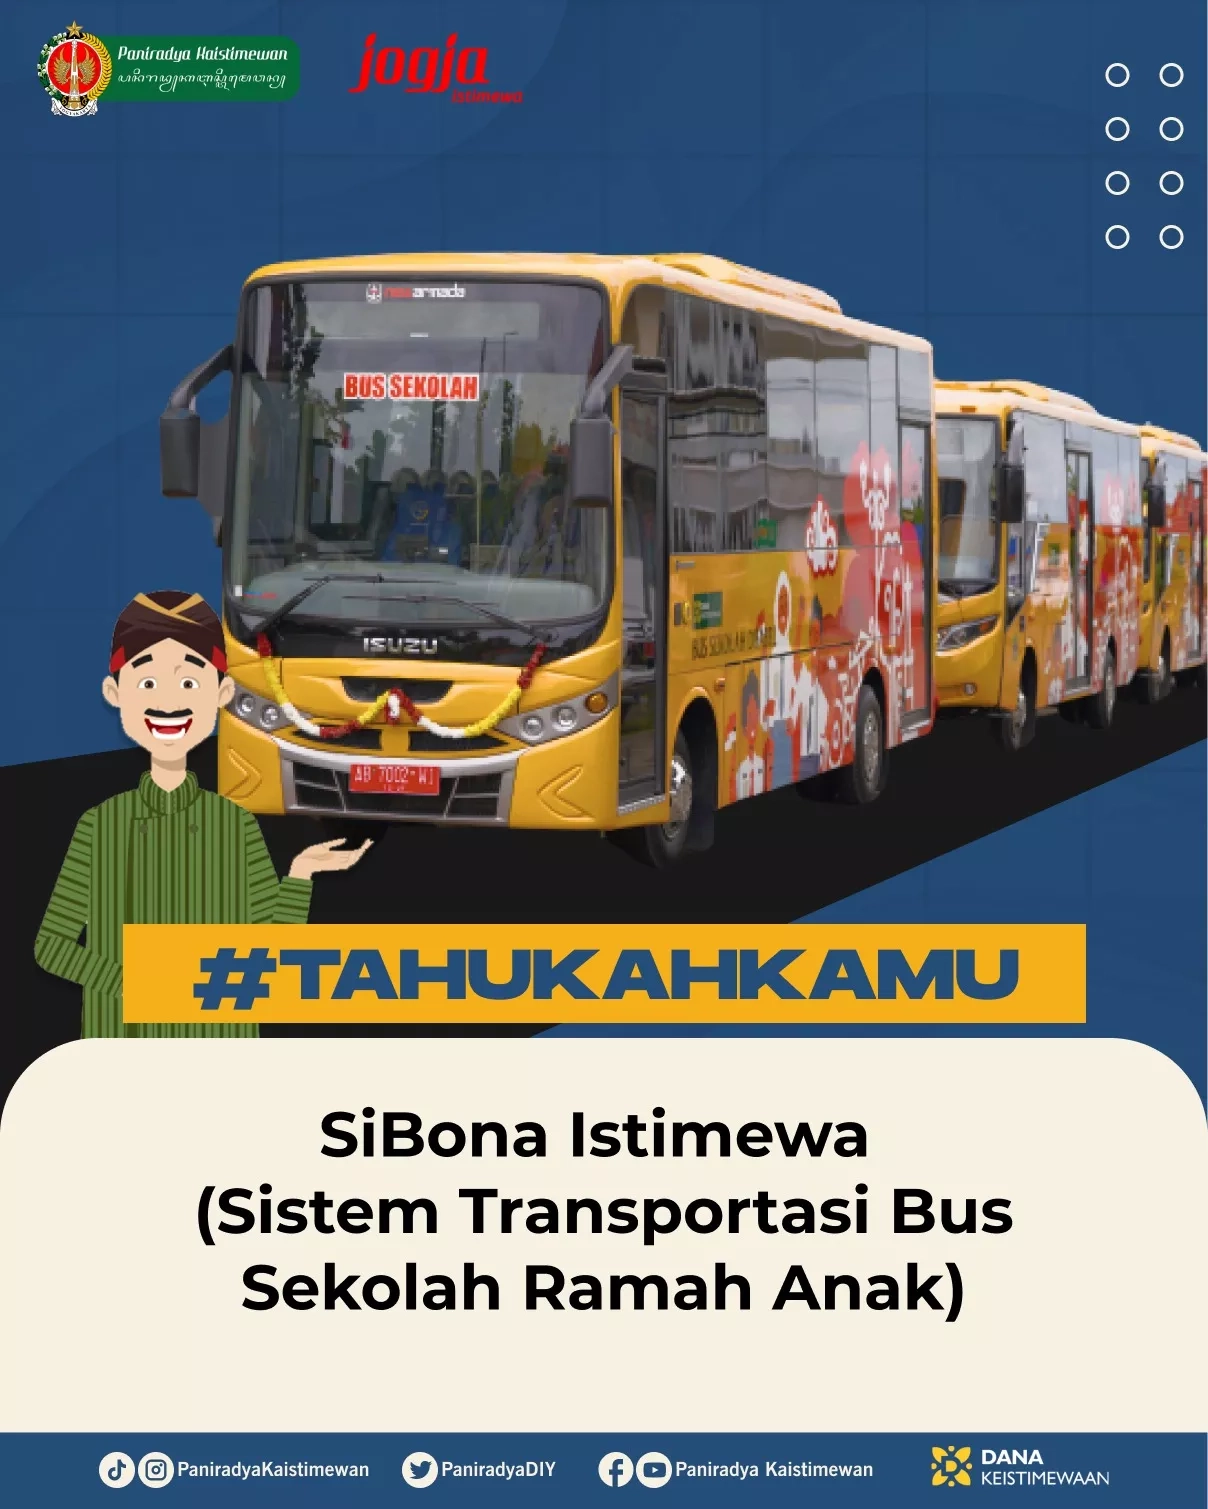 SiBona Isitmewa (Sistem Transportasi Bus Sekolah Ramah Anak)